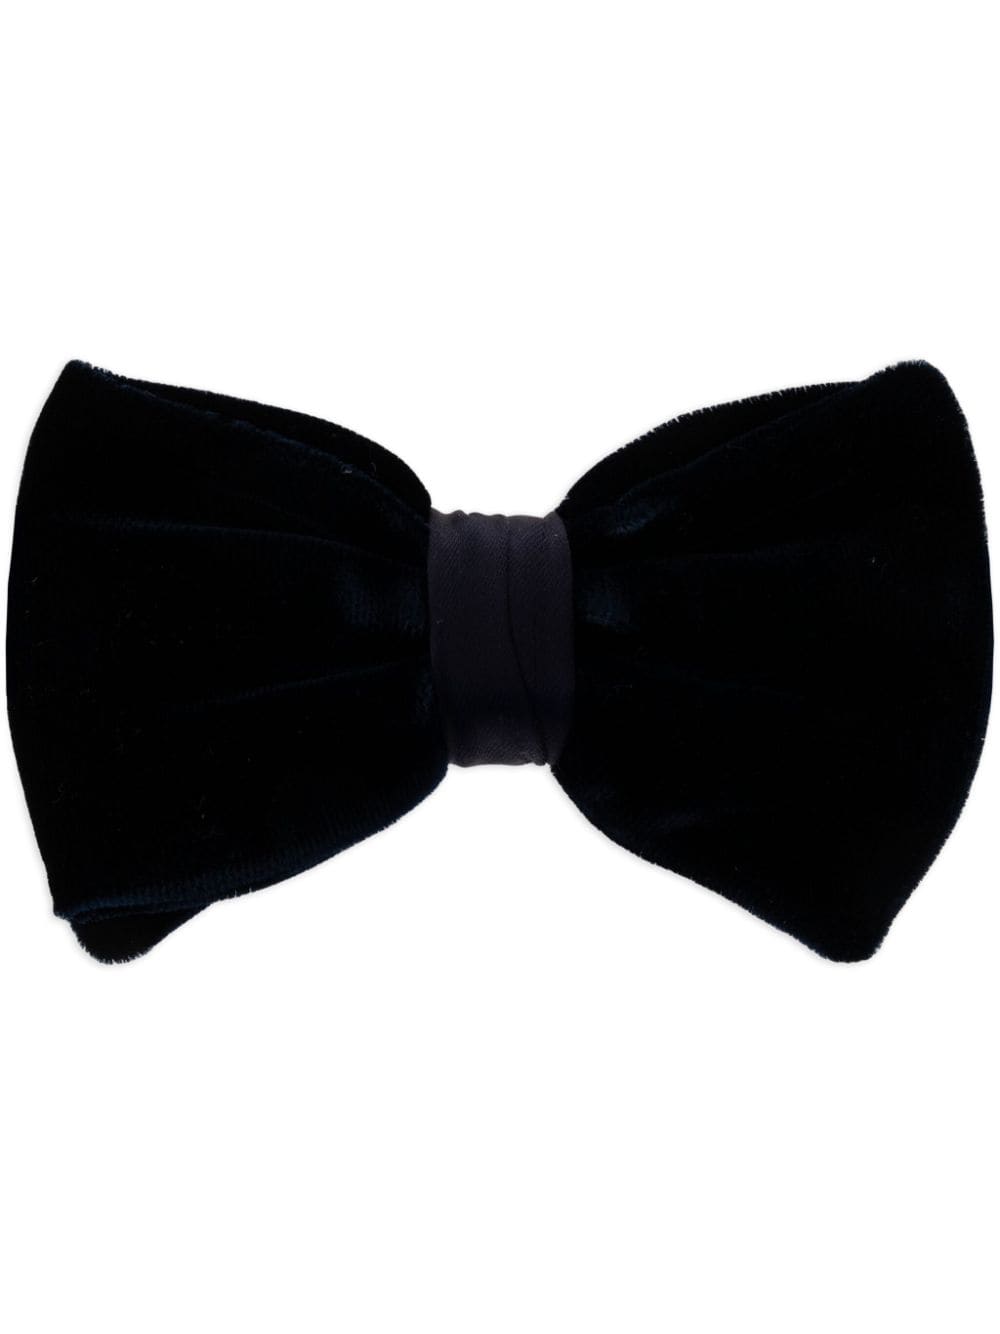 hook-fastening velvet bow tie